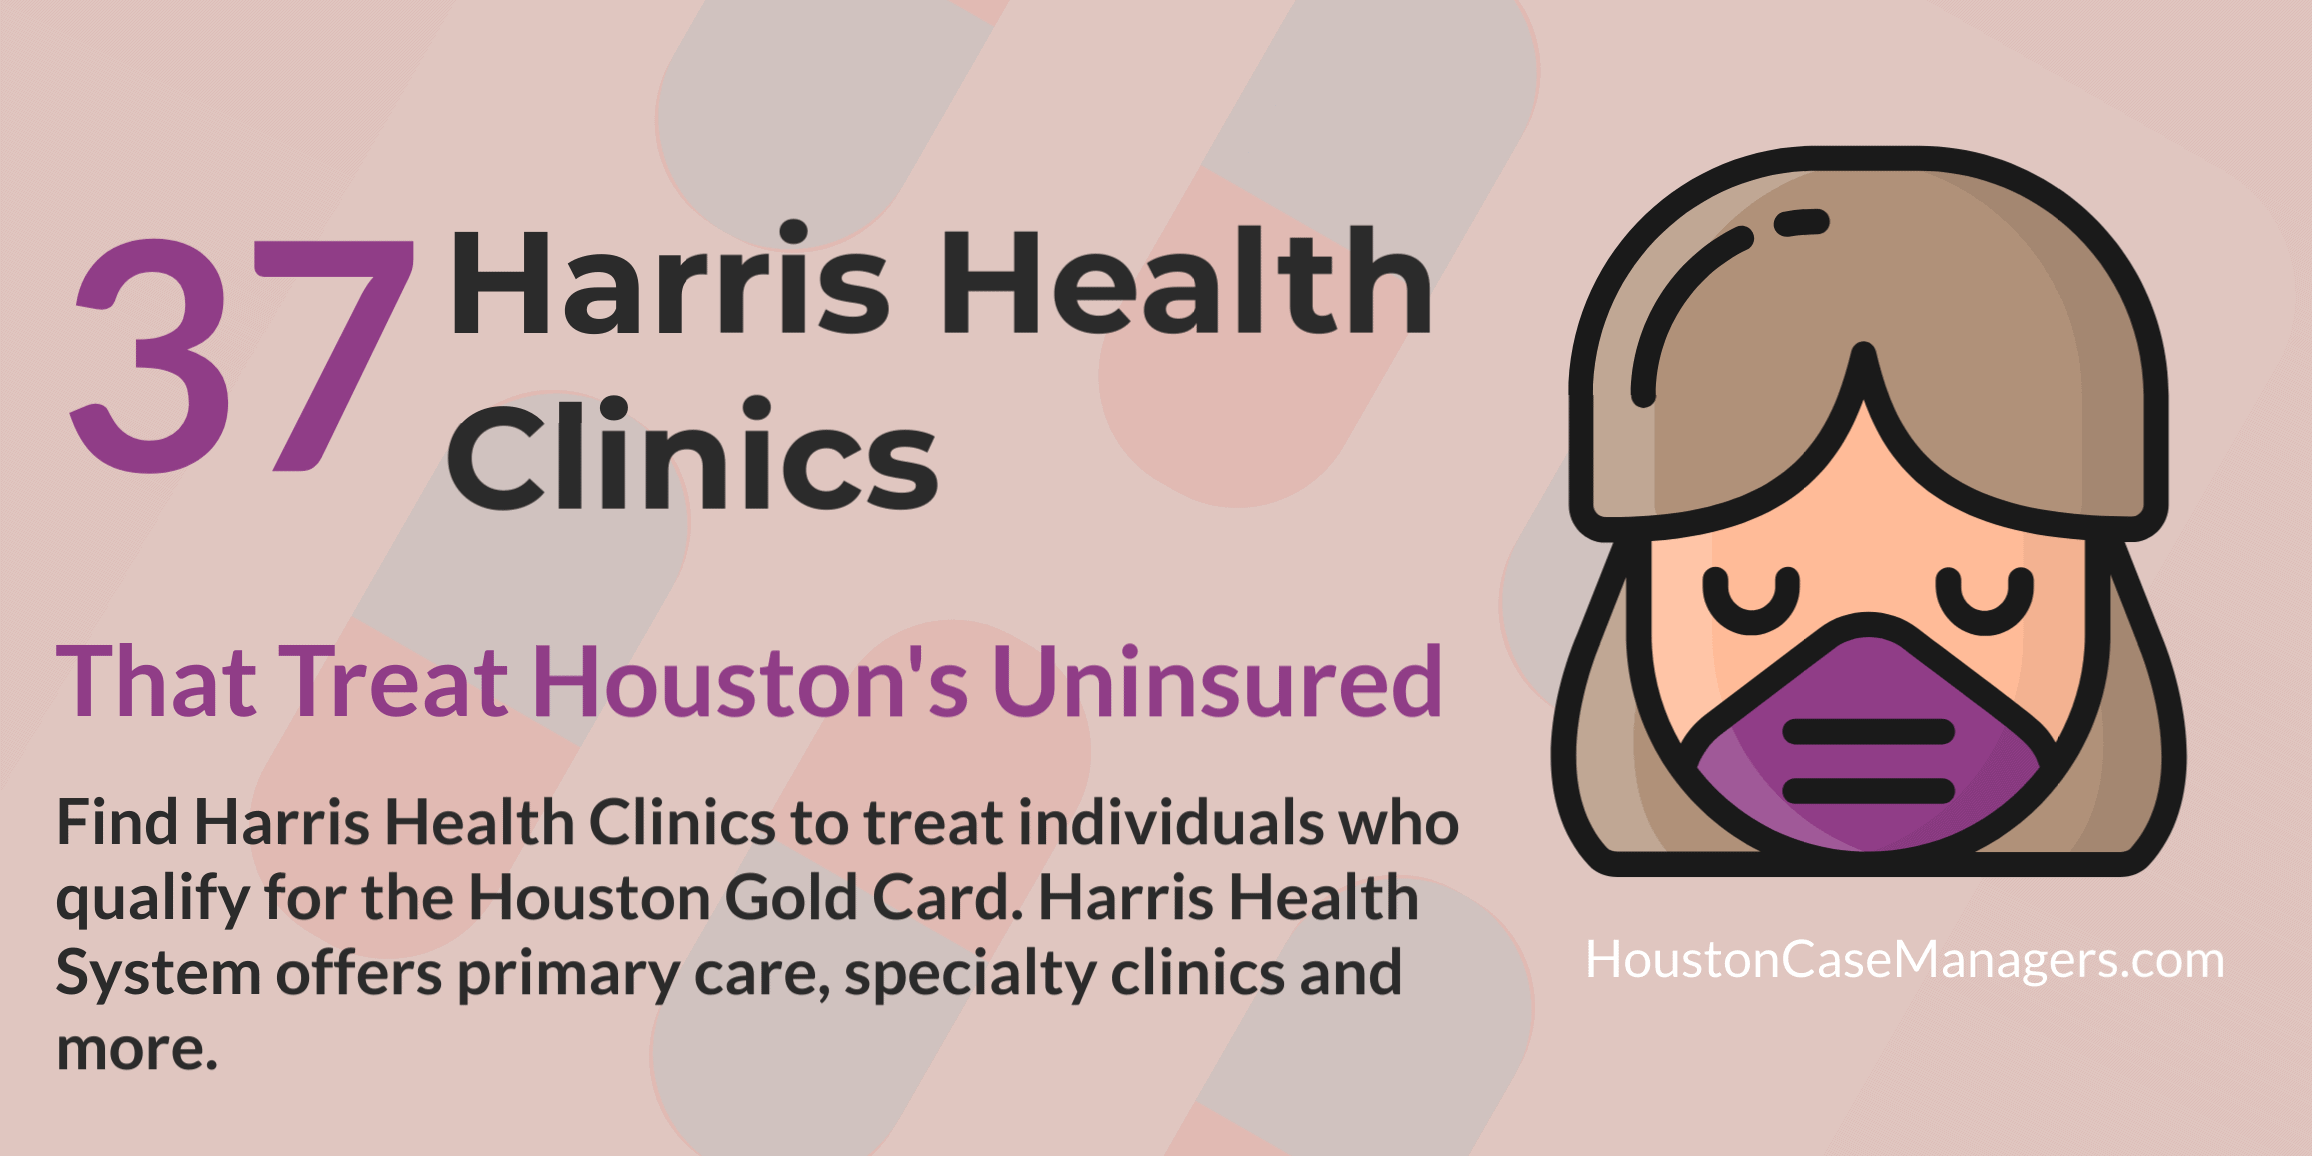 harris health clinics